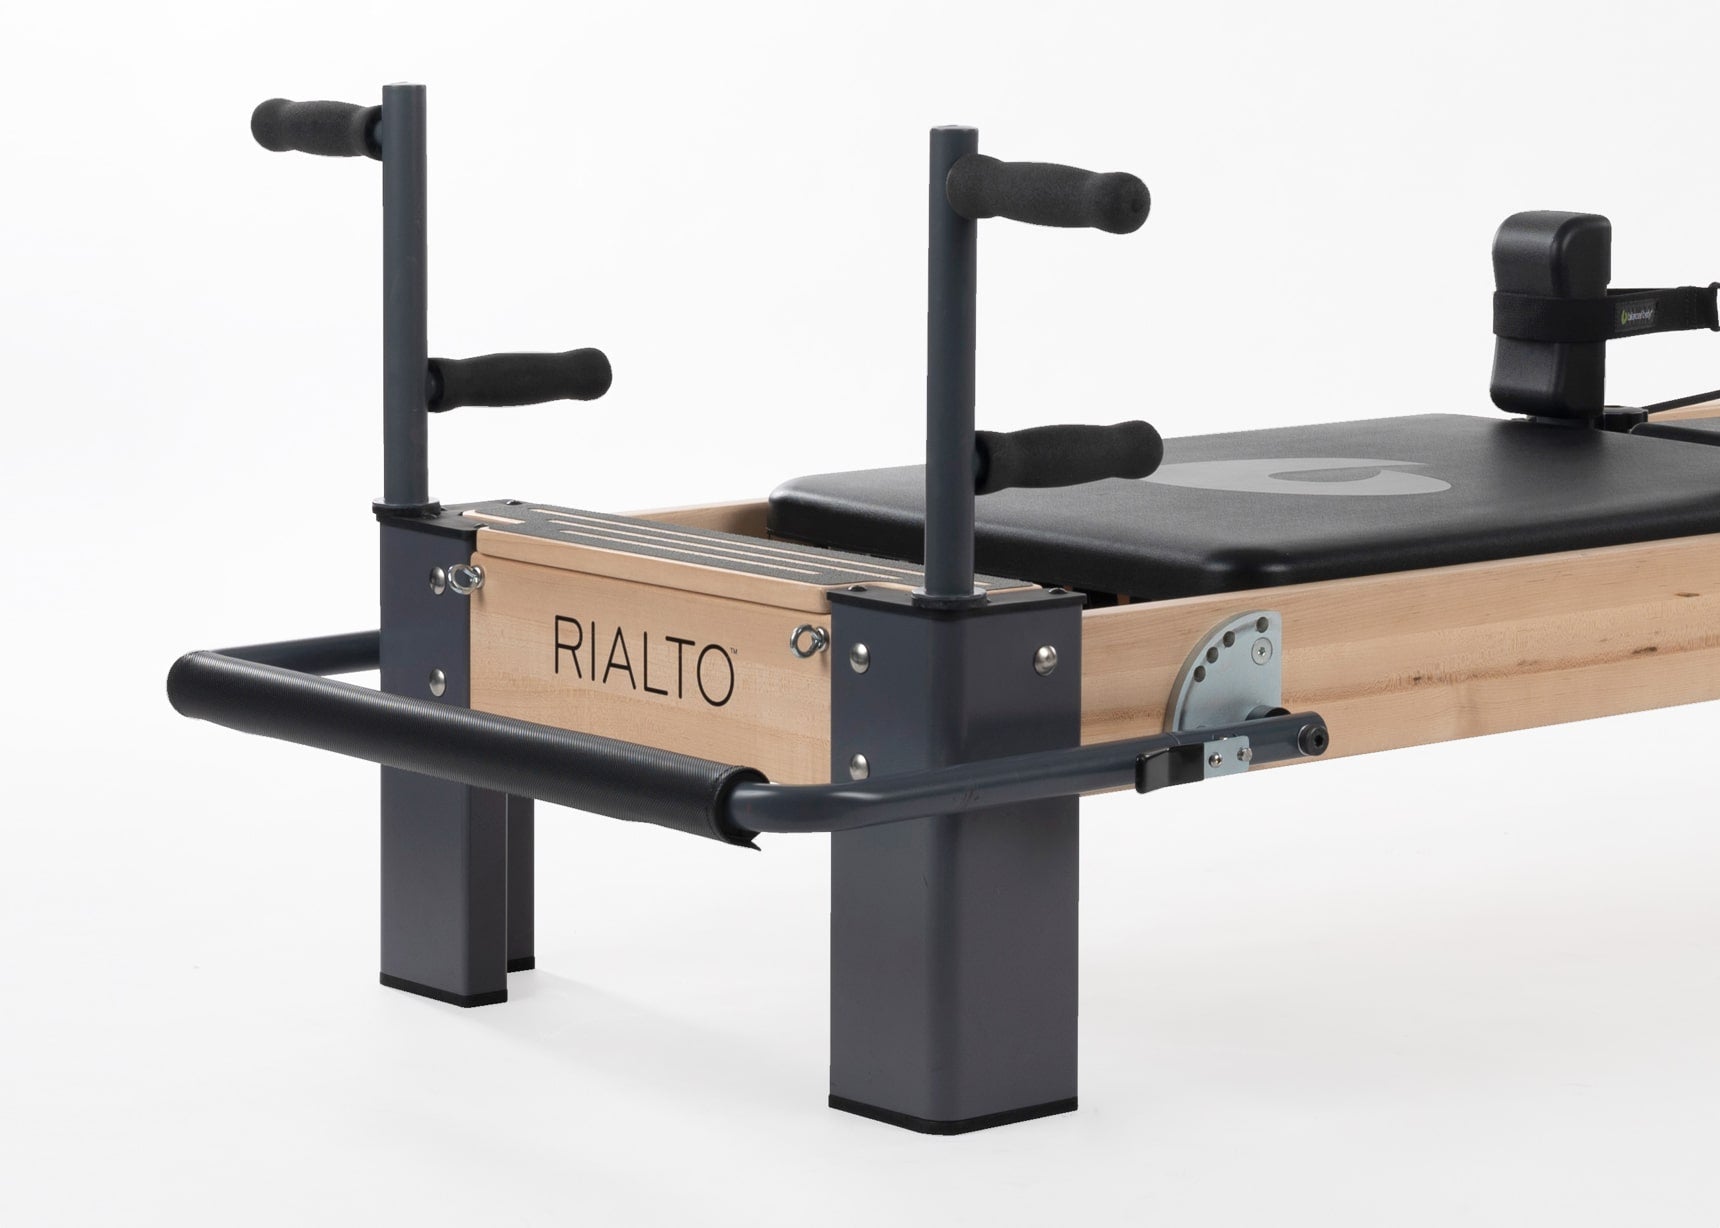 Rialto Reformer by Balanced Body Pilayes